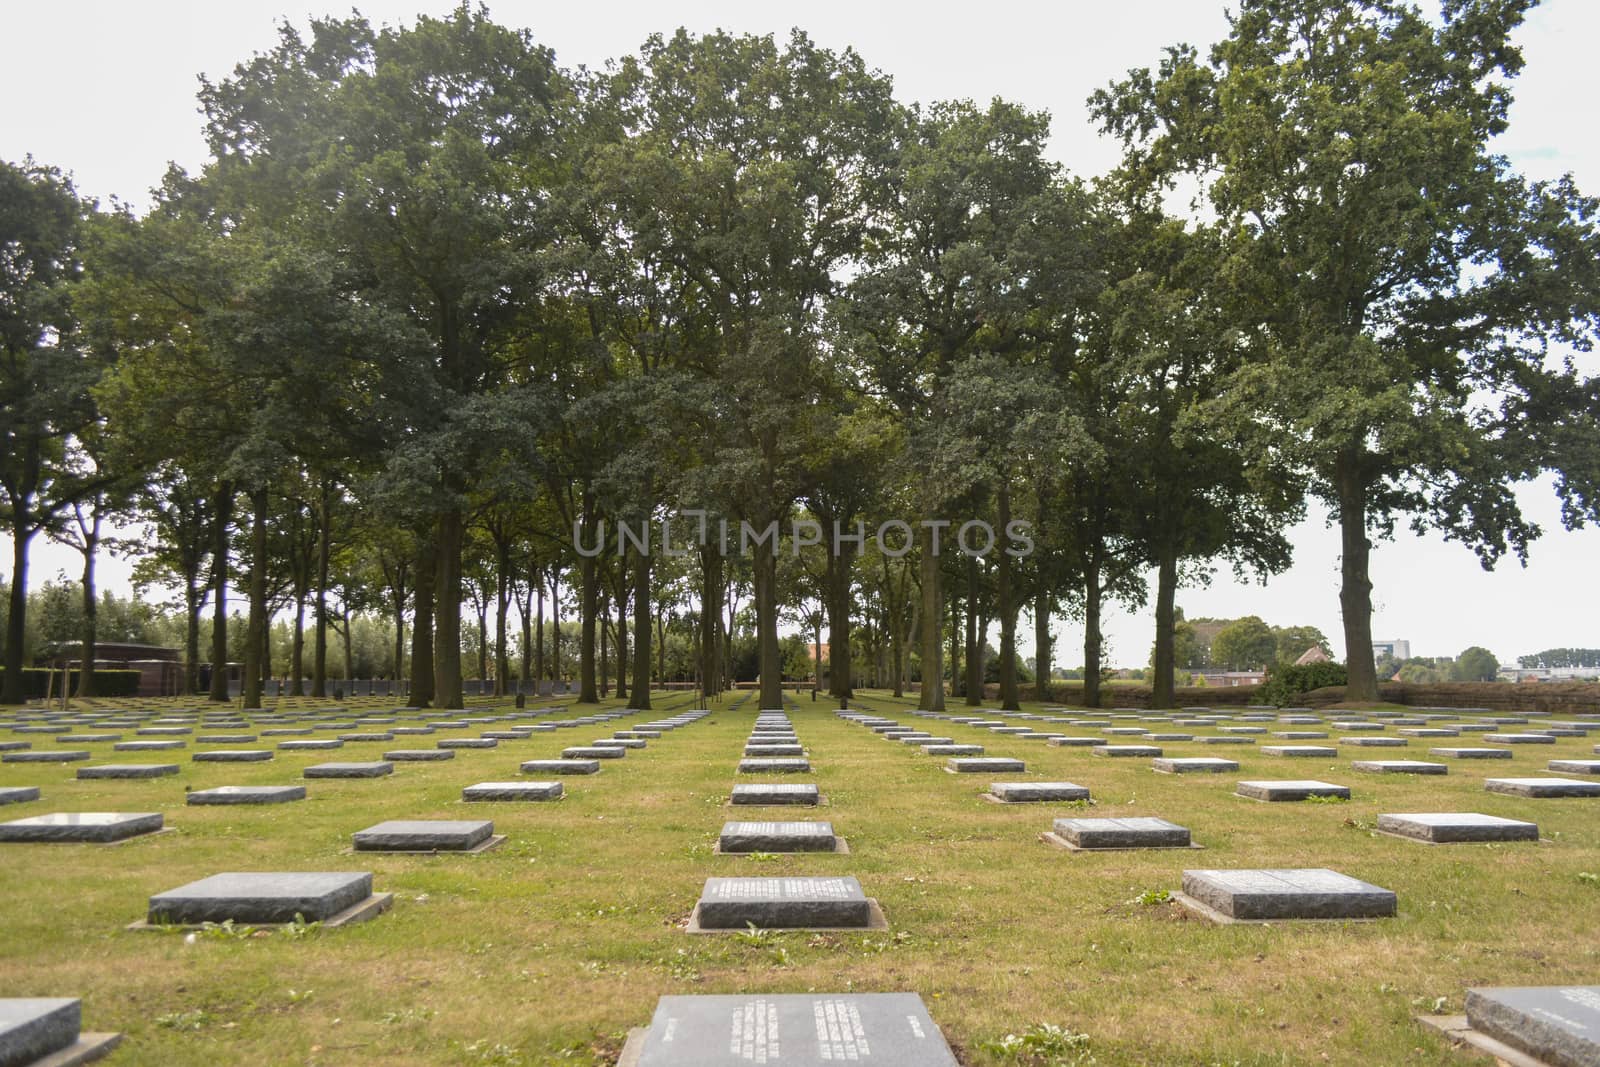 German war cemetery Deutscher Soldatenfriedhof in Langemark, Belgium. WWI military cemetery by kb79